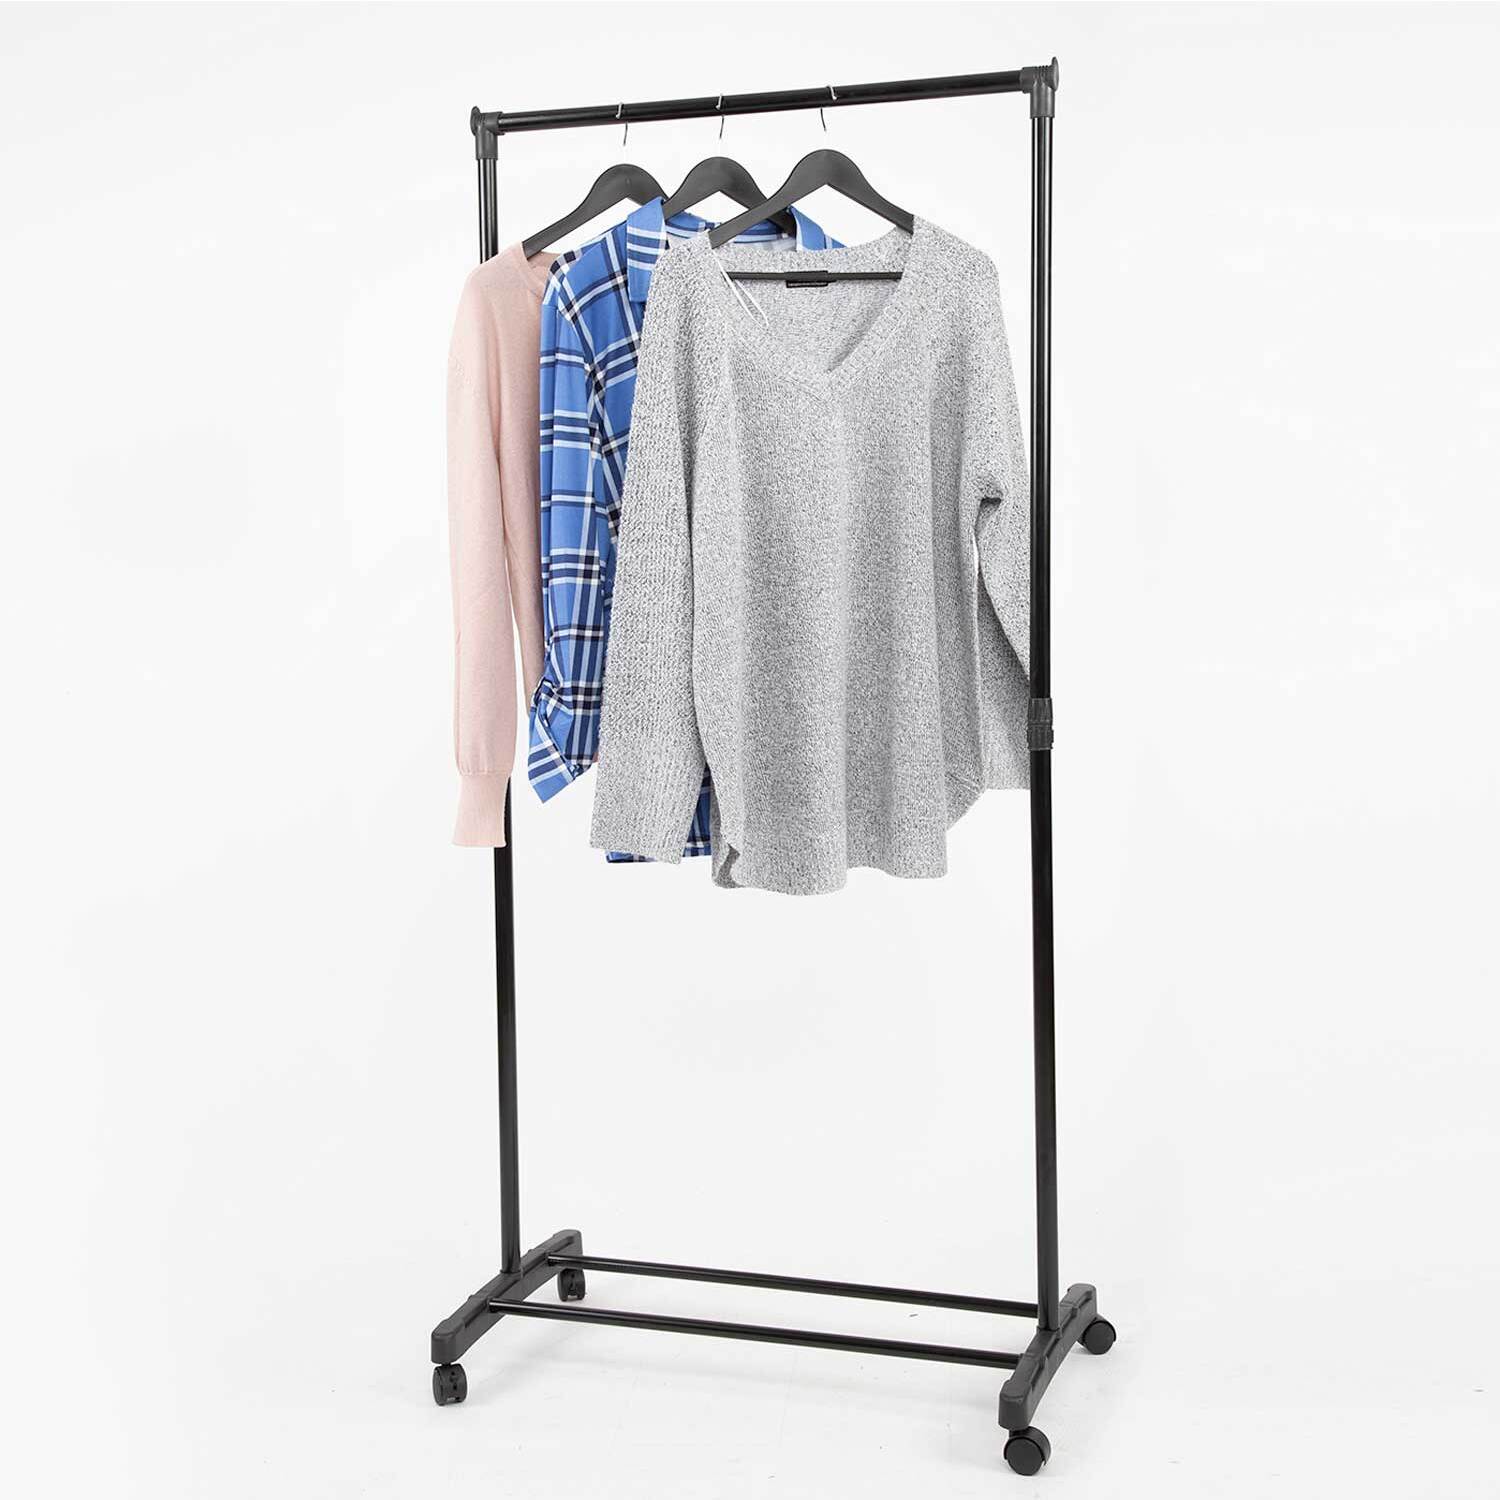 Portable garment rack